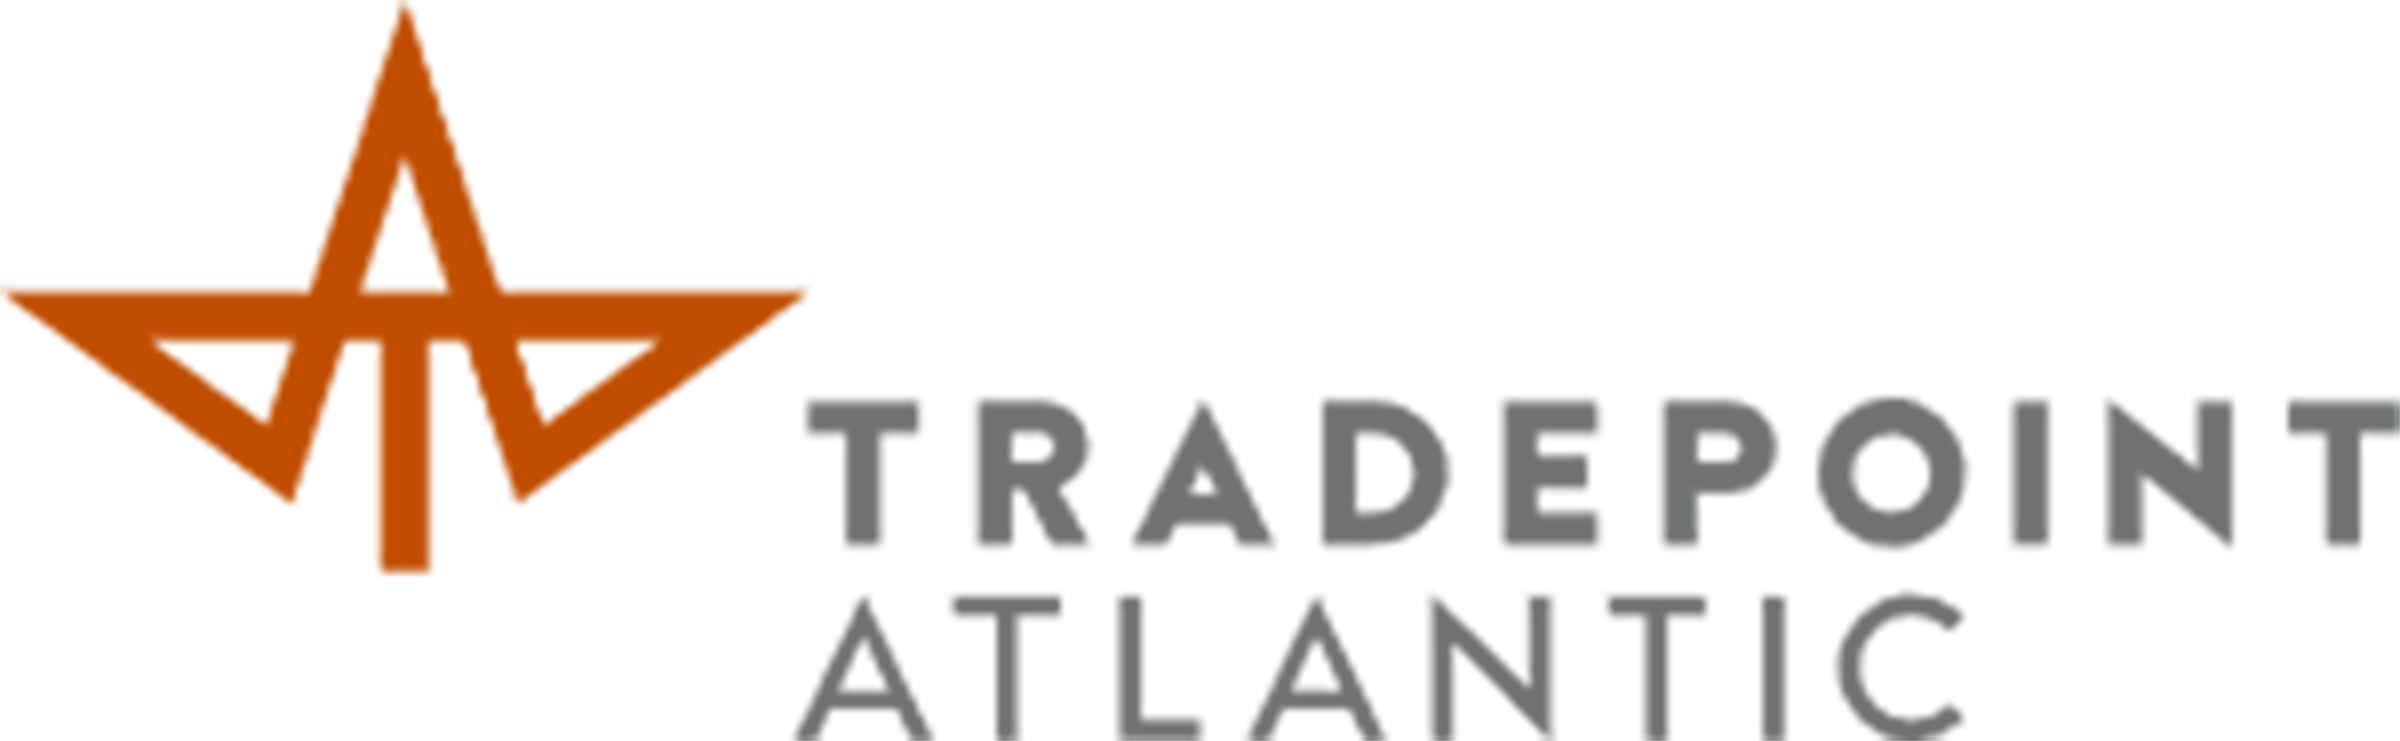 Tradepoint Logo